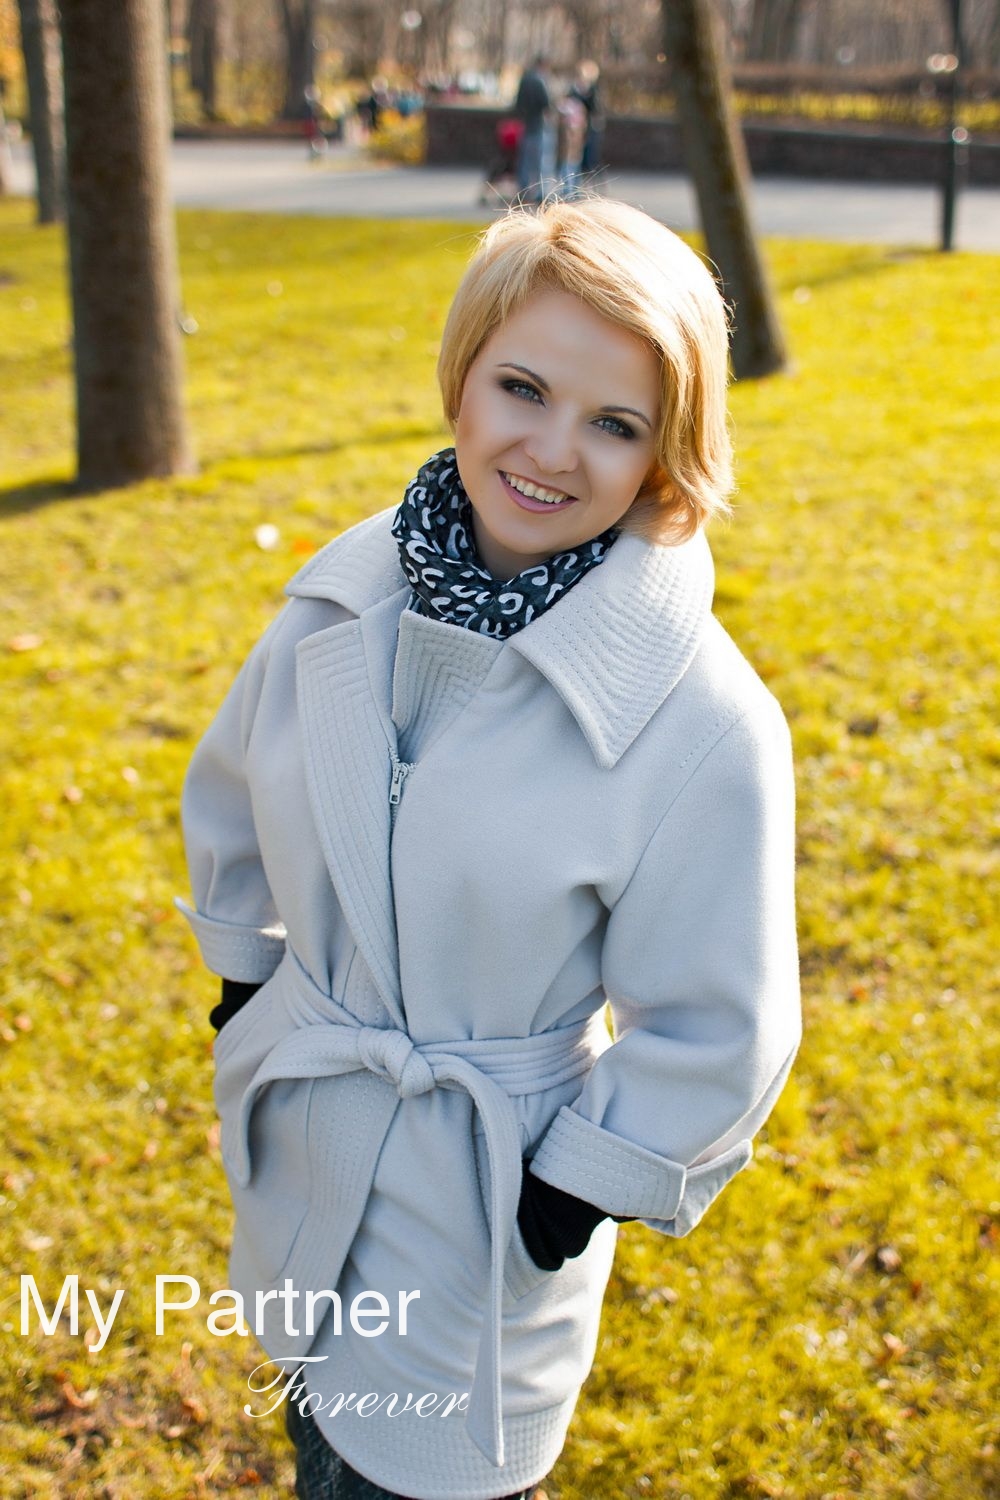 Charming Woman from Belarus - Nataliya from Gomel, Belarus